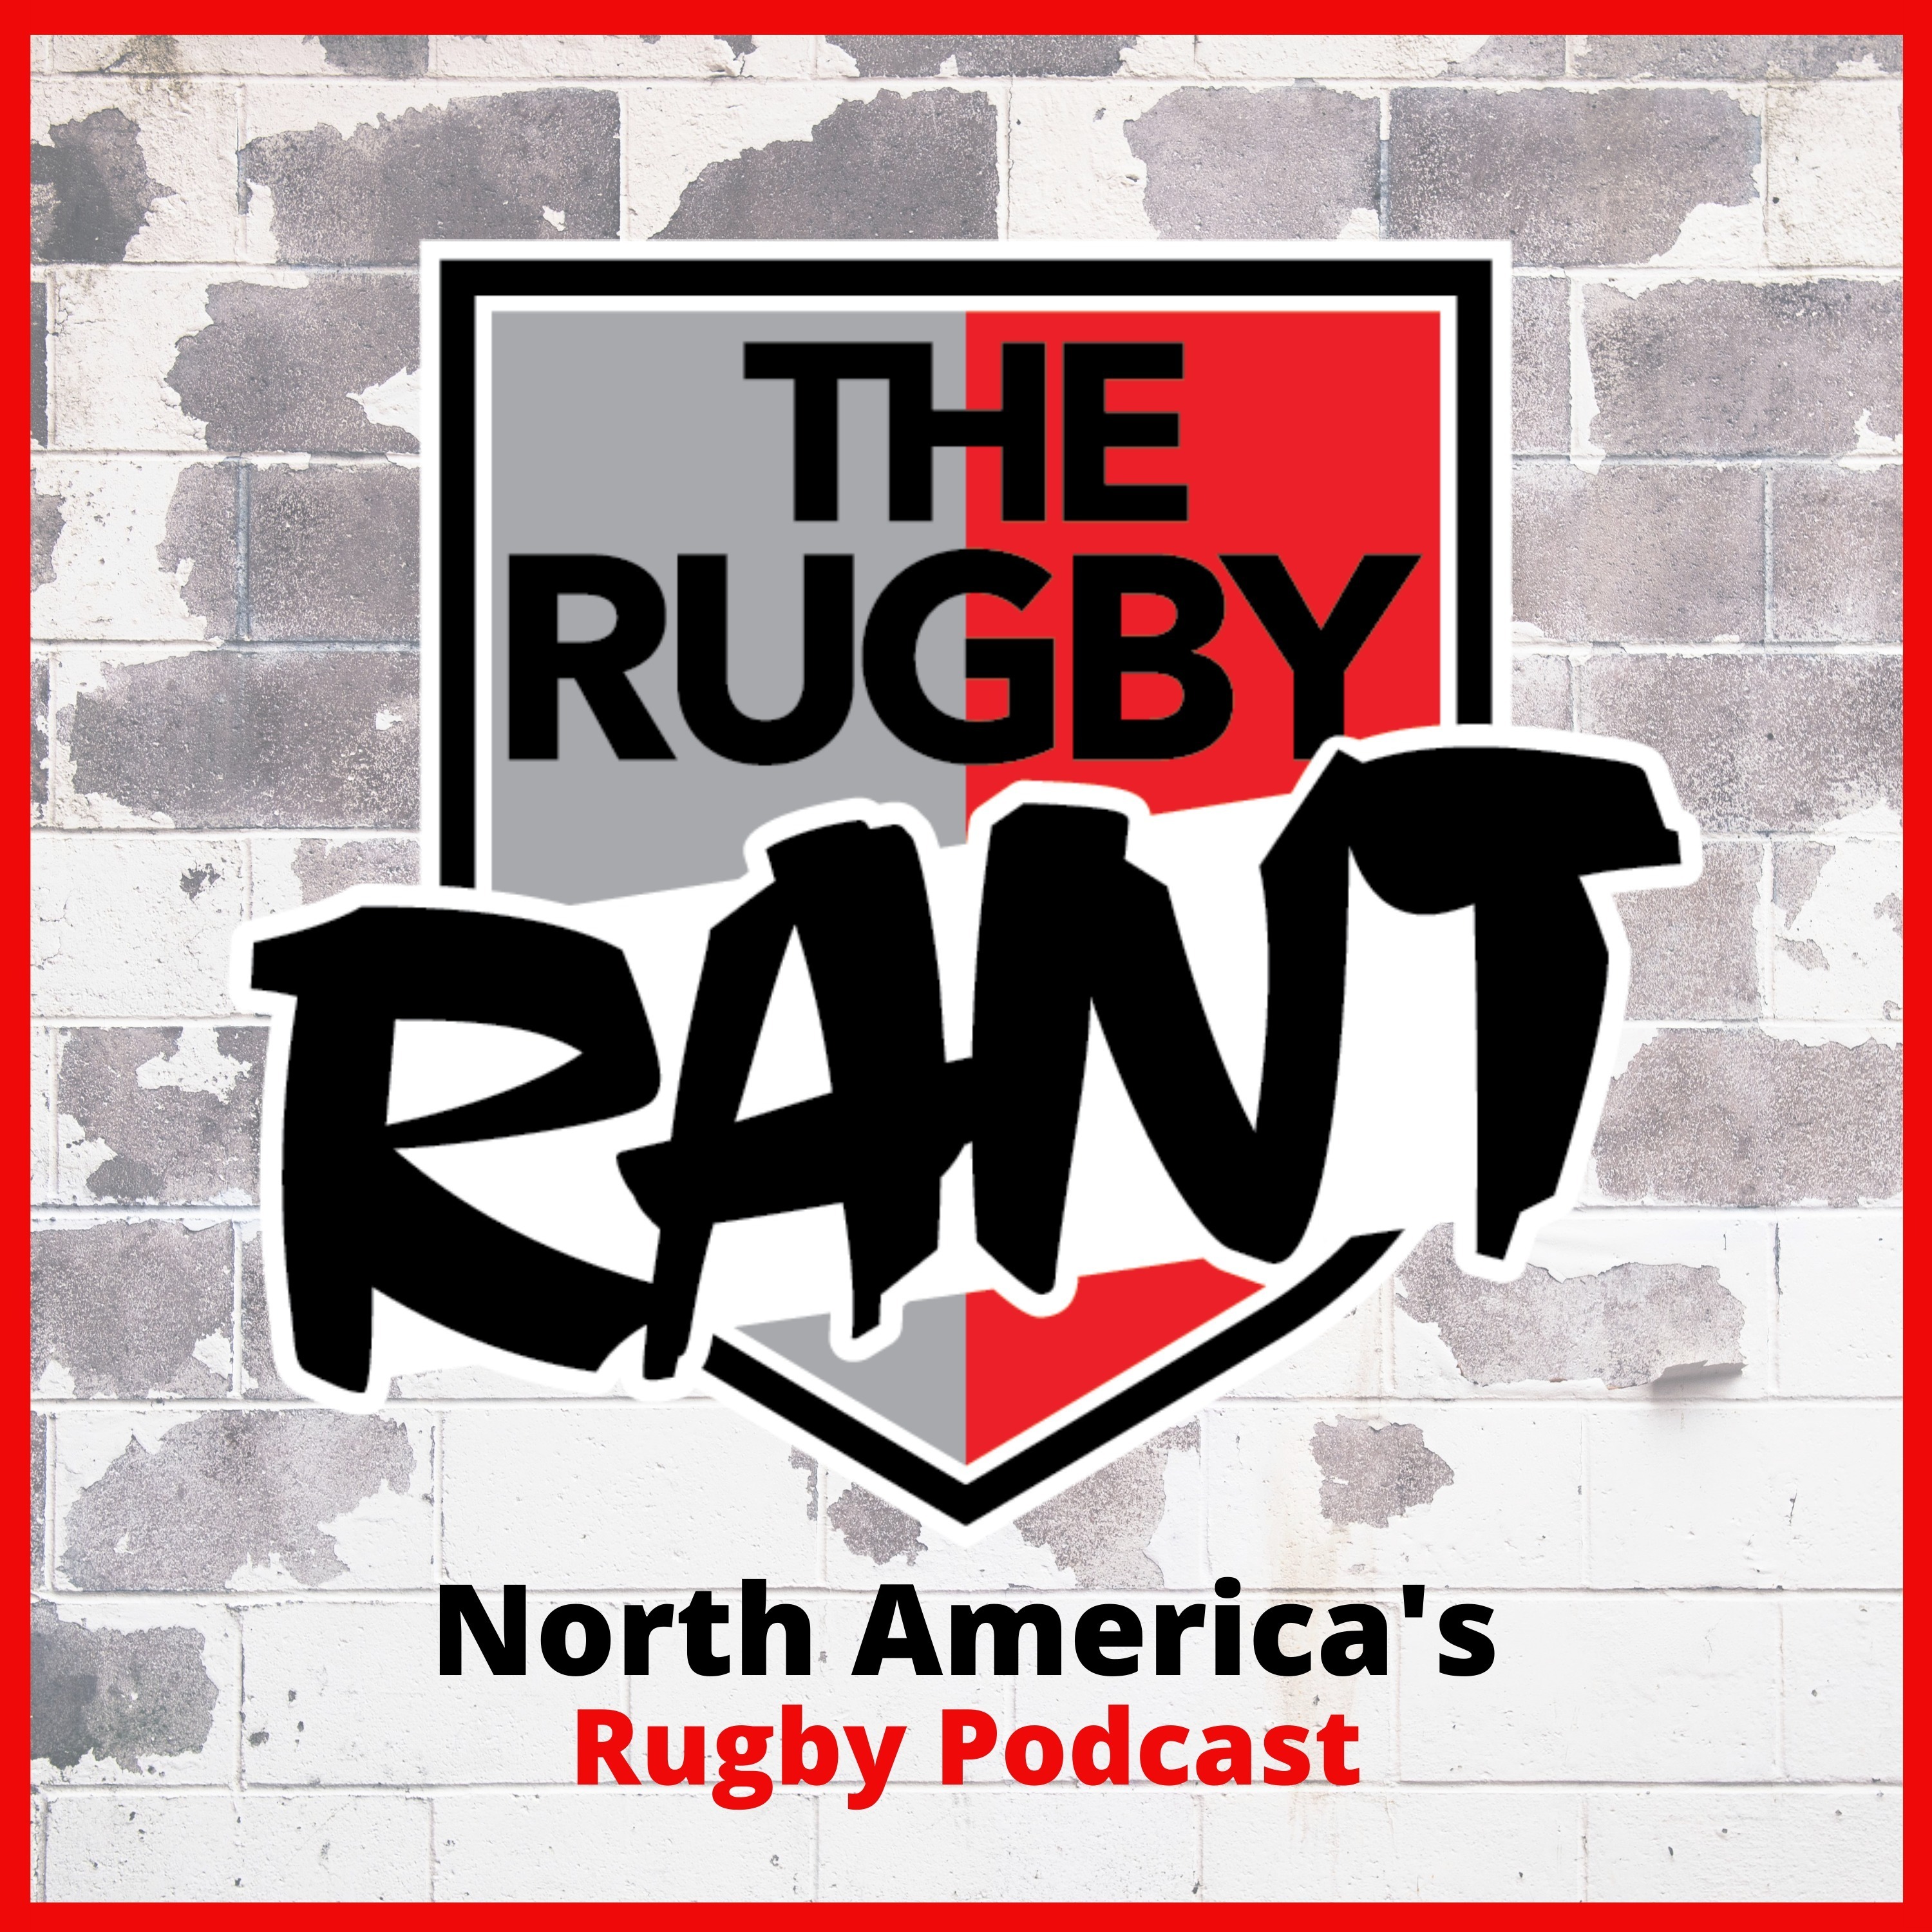 The Rugby Rant - Run, Pass or Kick with Ronald Bukusi